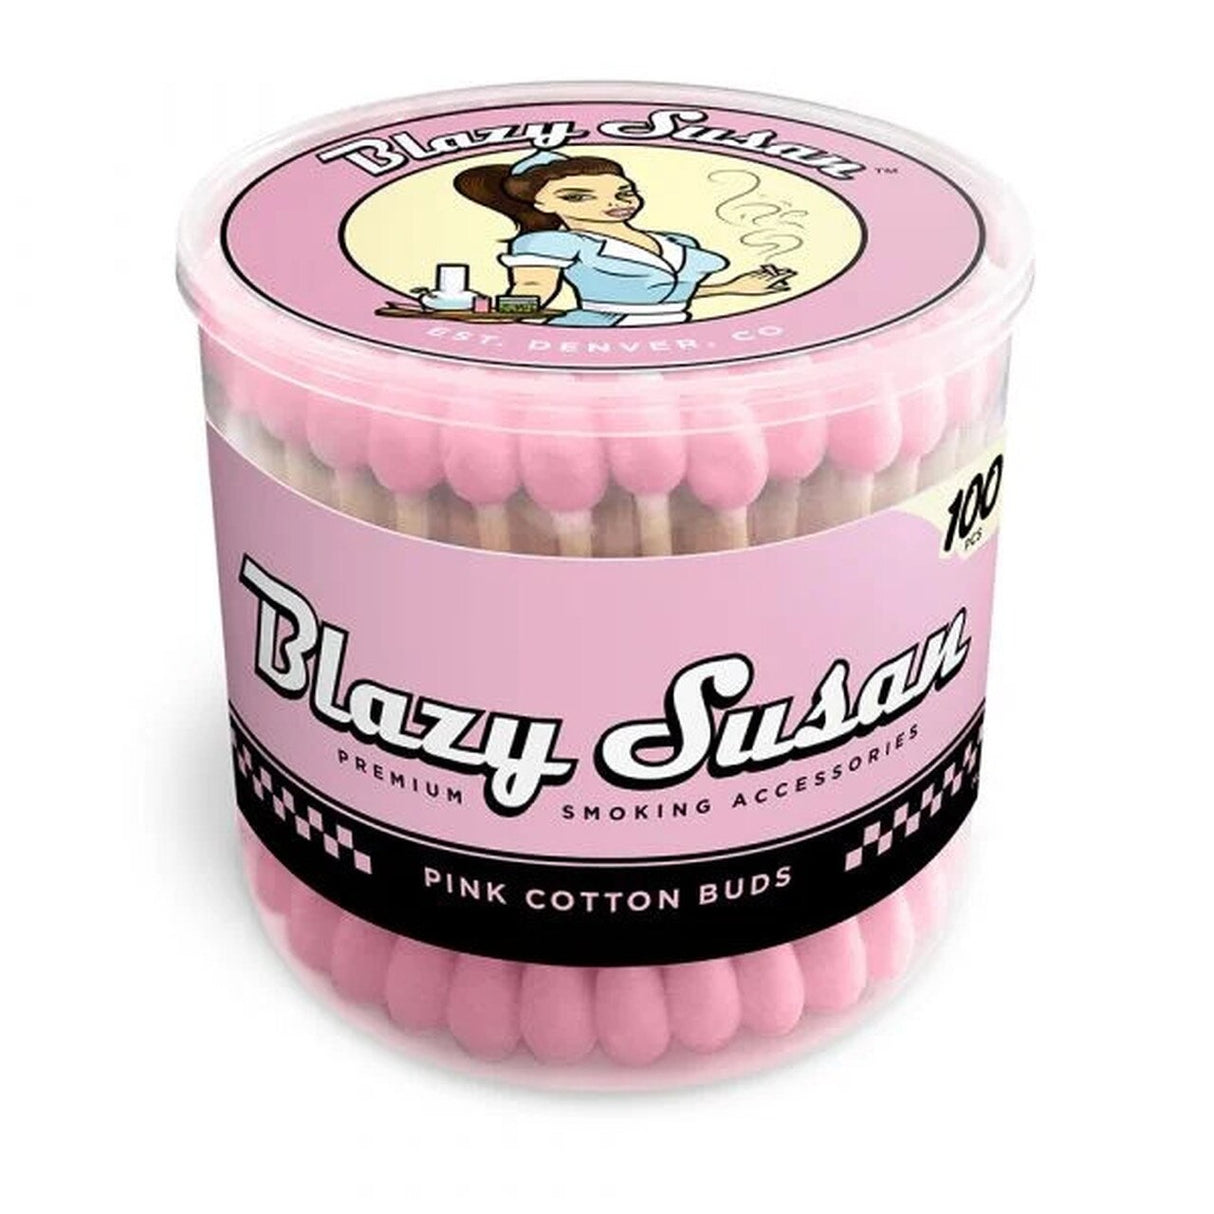 Blazy Susan - Pink Cotton Buds 100Ct